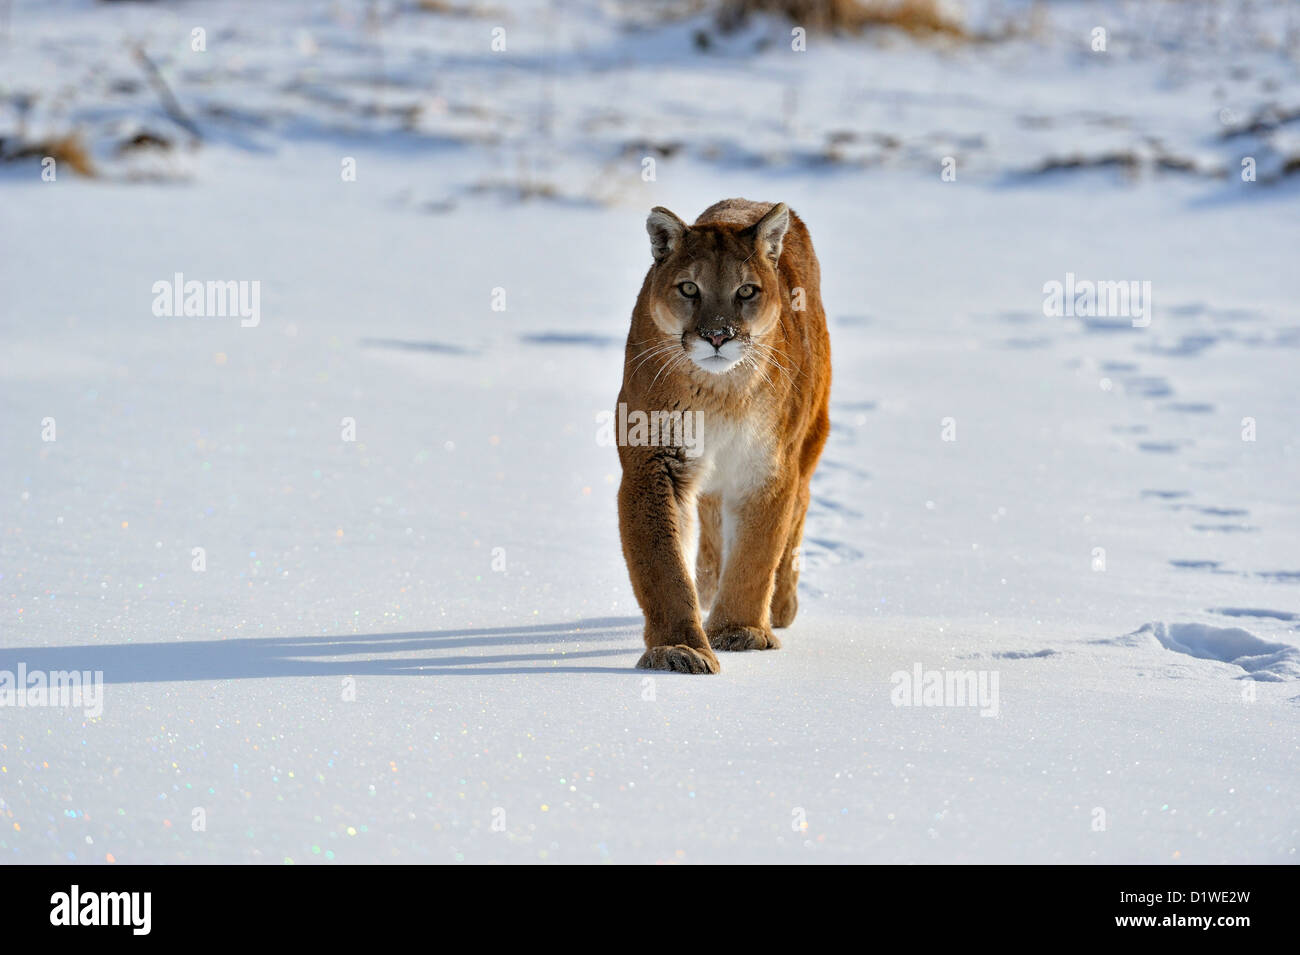 Cougar, Puma, Mountain lion (Puma concolor) Walking on a frozen pond, captive raised specimen, Bozeman Montana, USA Stock Photo